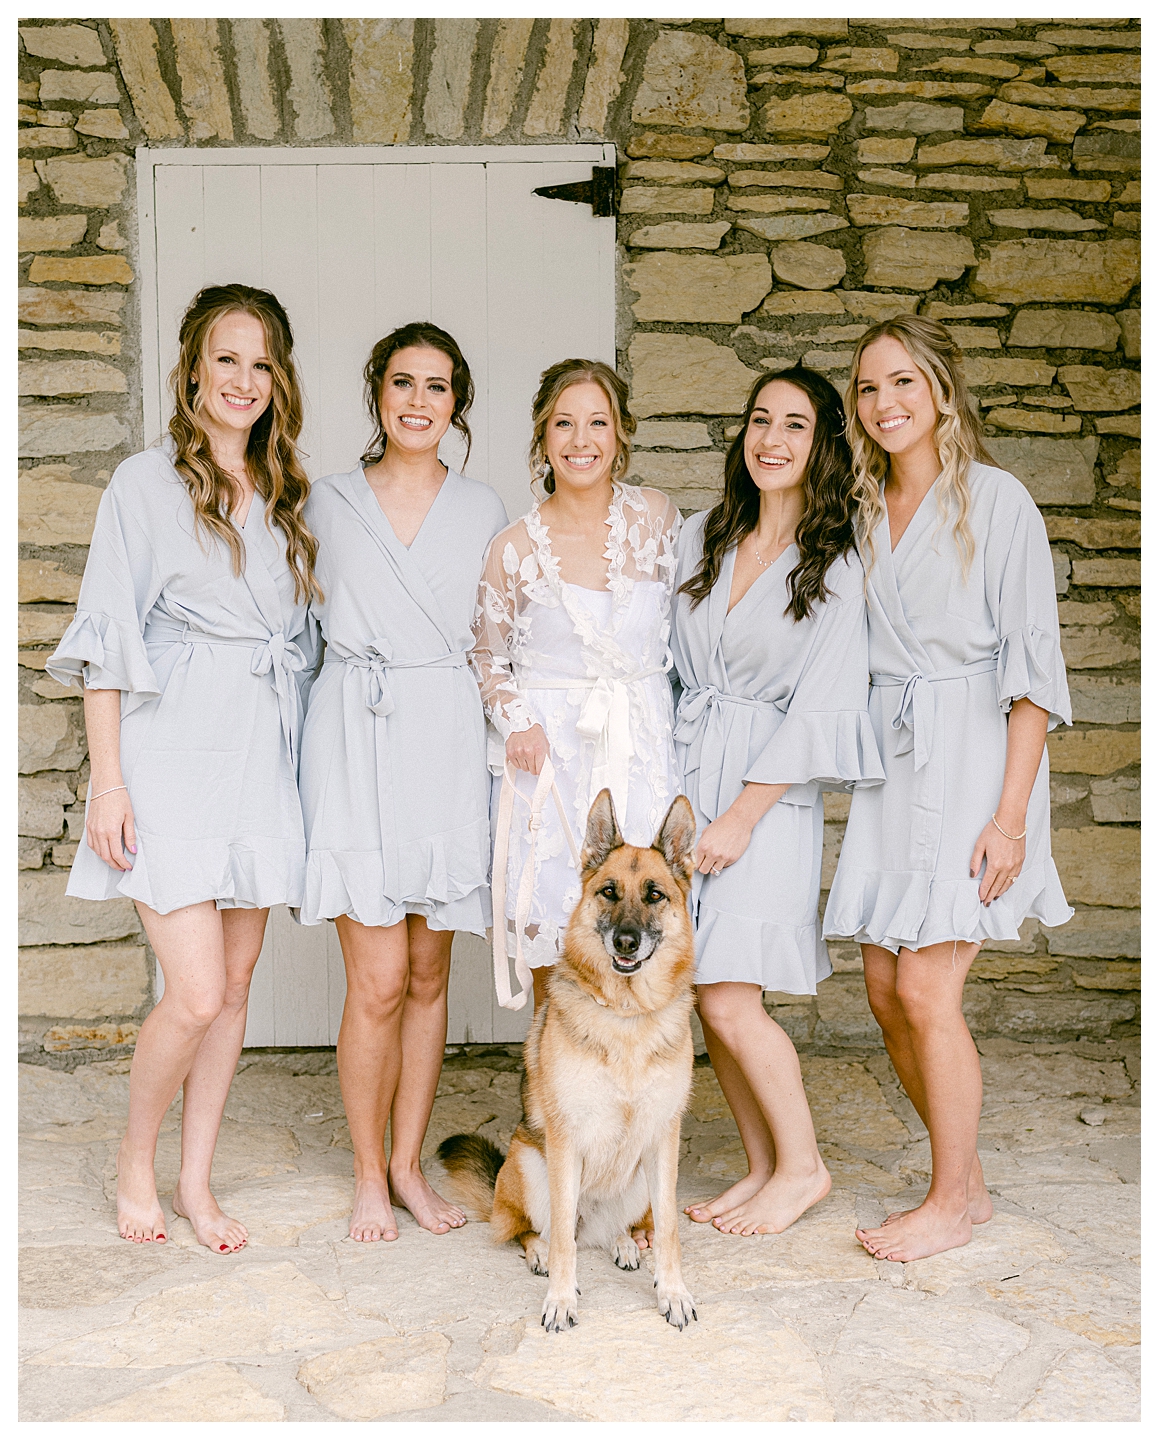 Bridesmaids at a Mayowood Stone Barn Wedding. Photo by Kayla Lee.